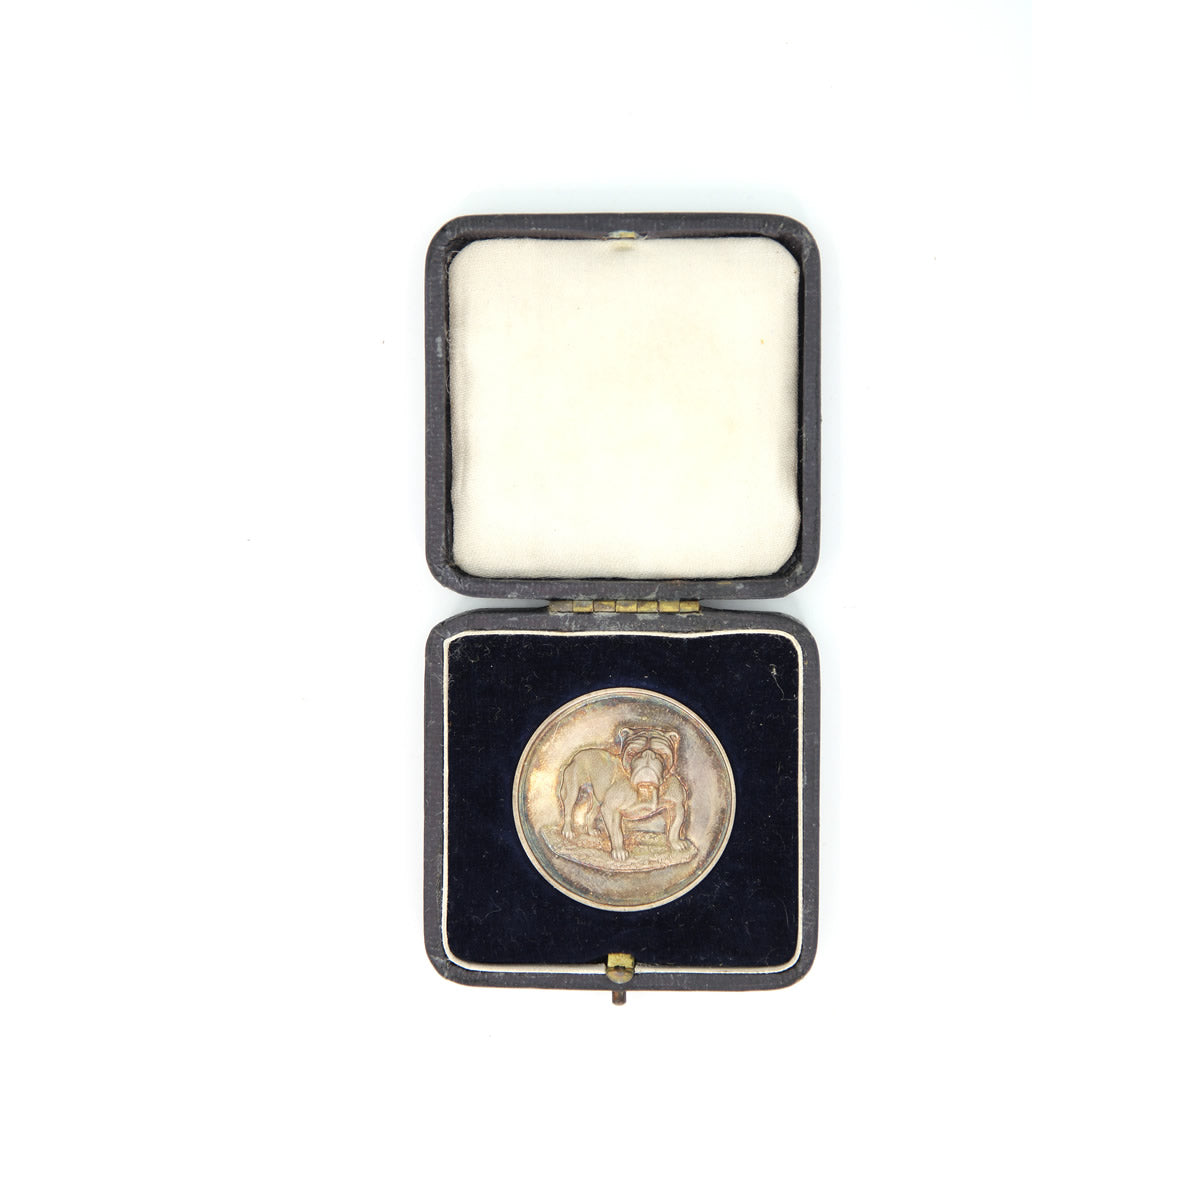 Northumberland Bulldog Club Medal (Silver Tone), c.1920's